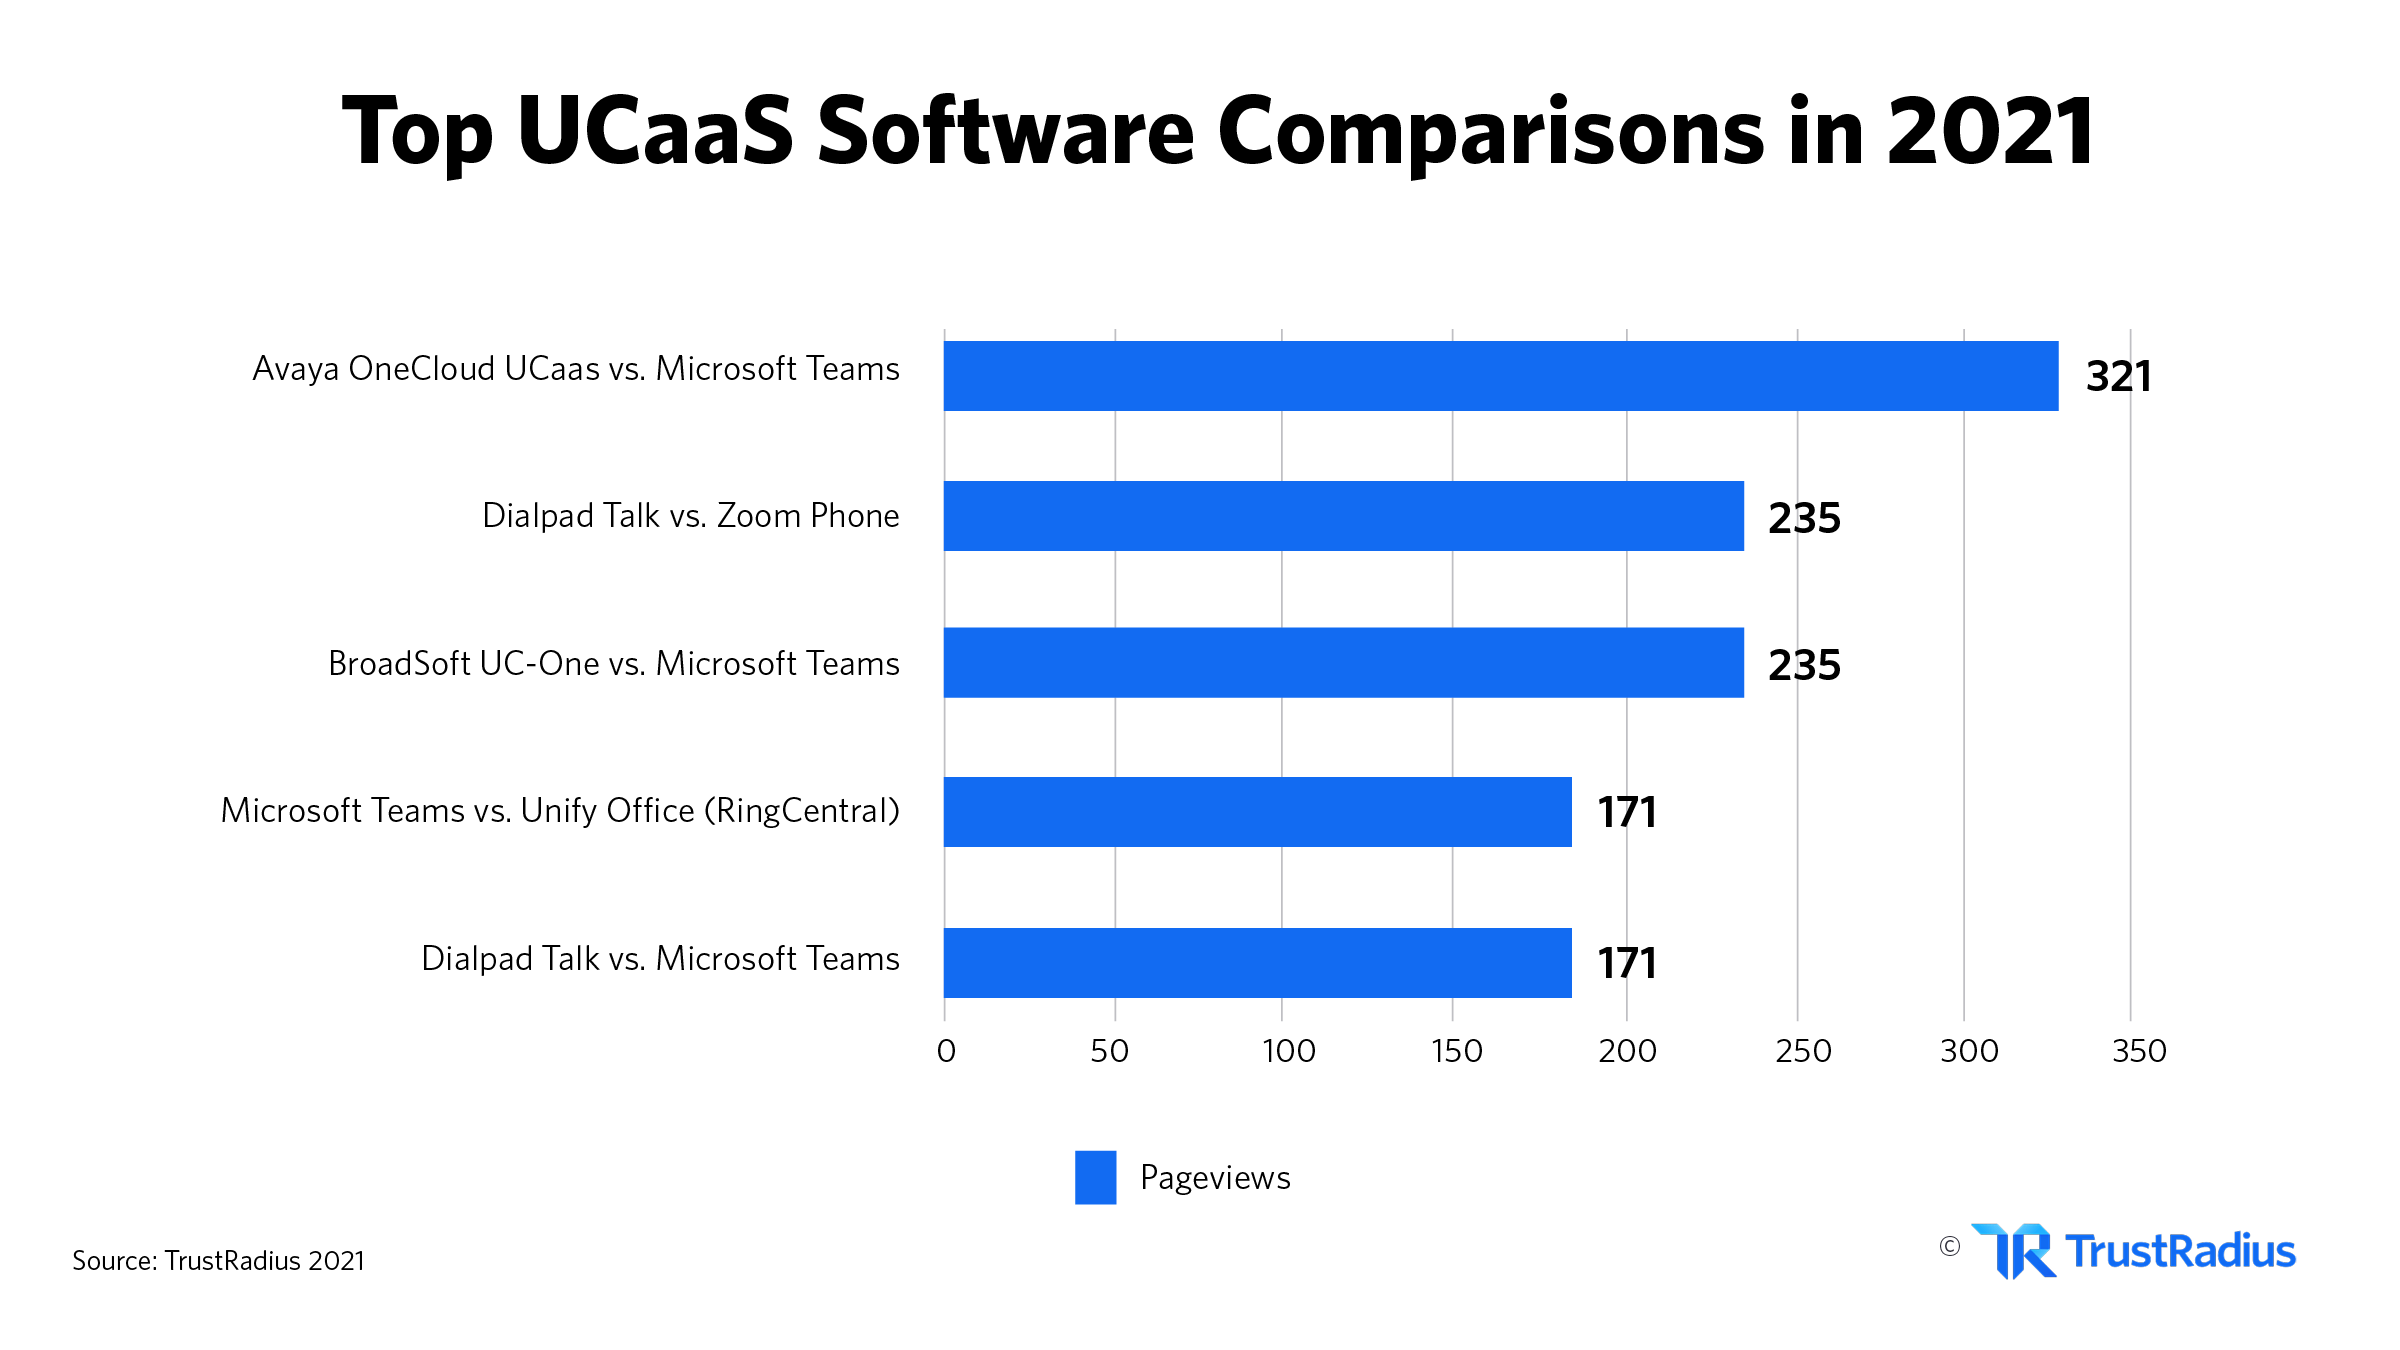 Top UCaaS software comparisons in 2021